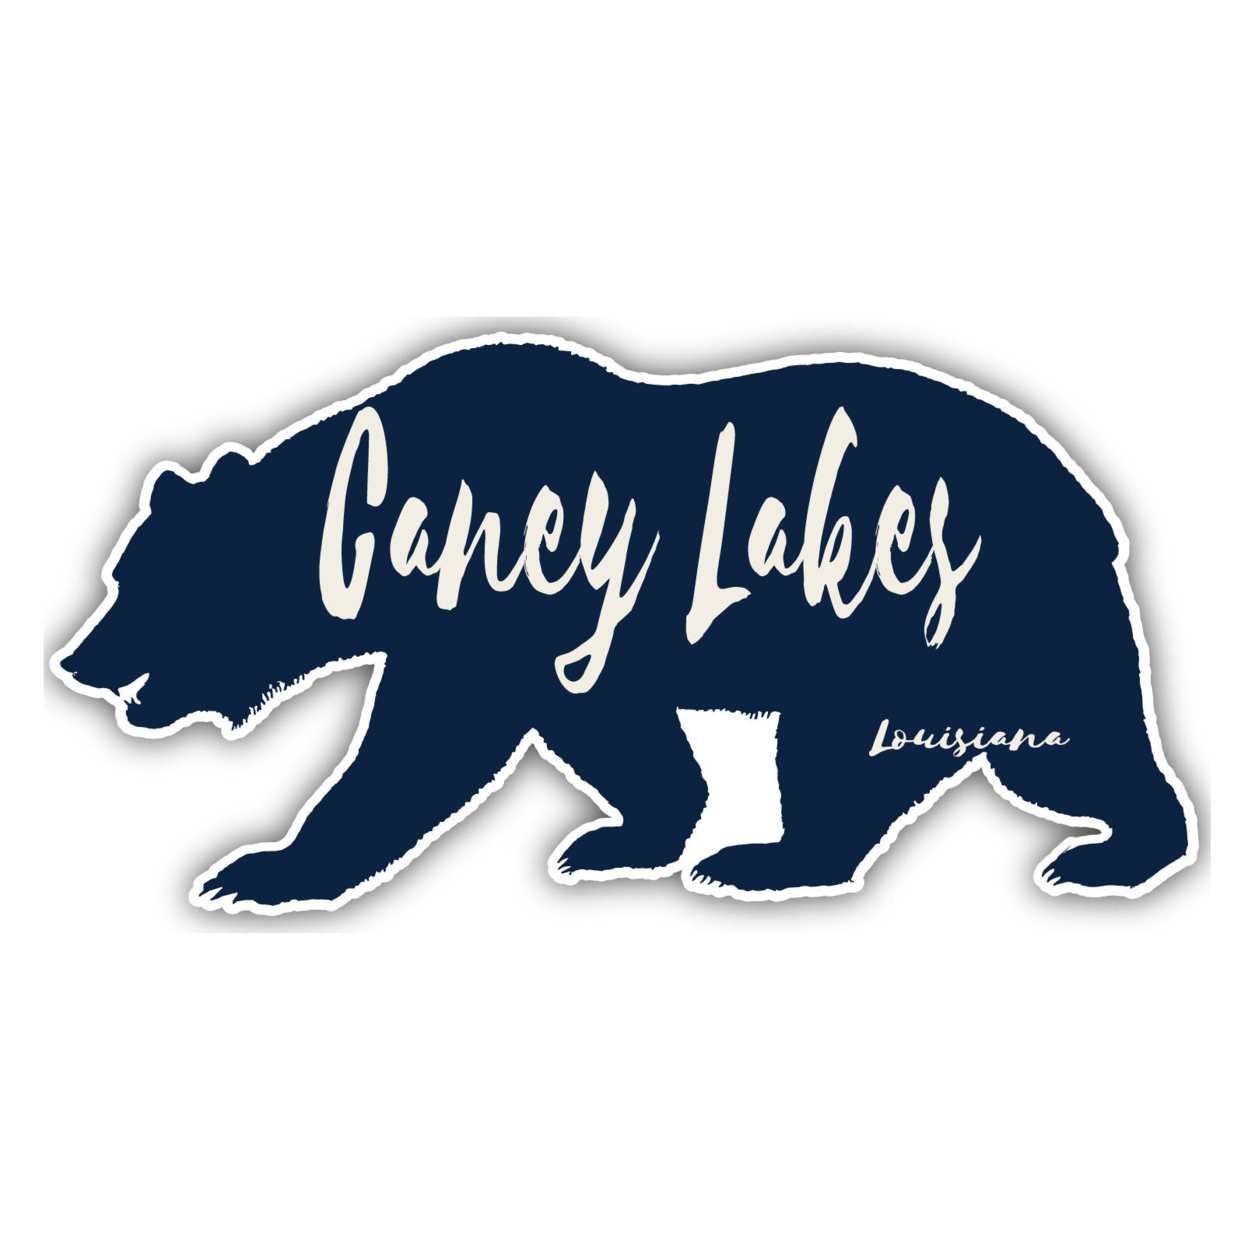 Caney Lakes Louisiana Souvenir Decorative Stickers (Choose Theme And Size) - Single Unit, 10-Inch, Bear